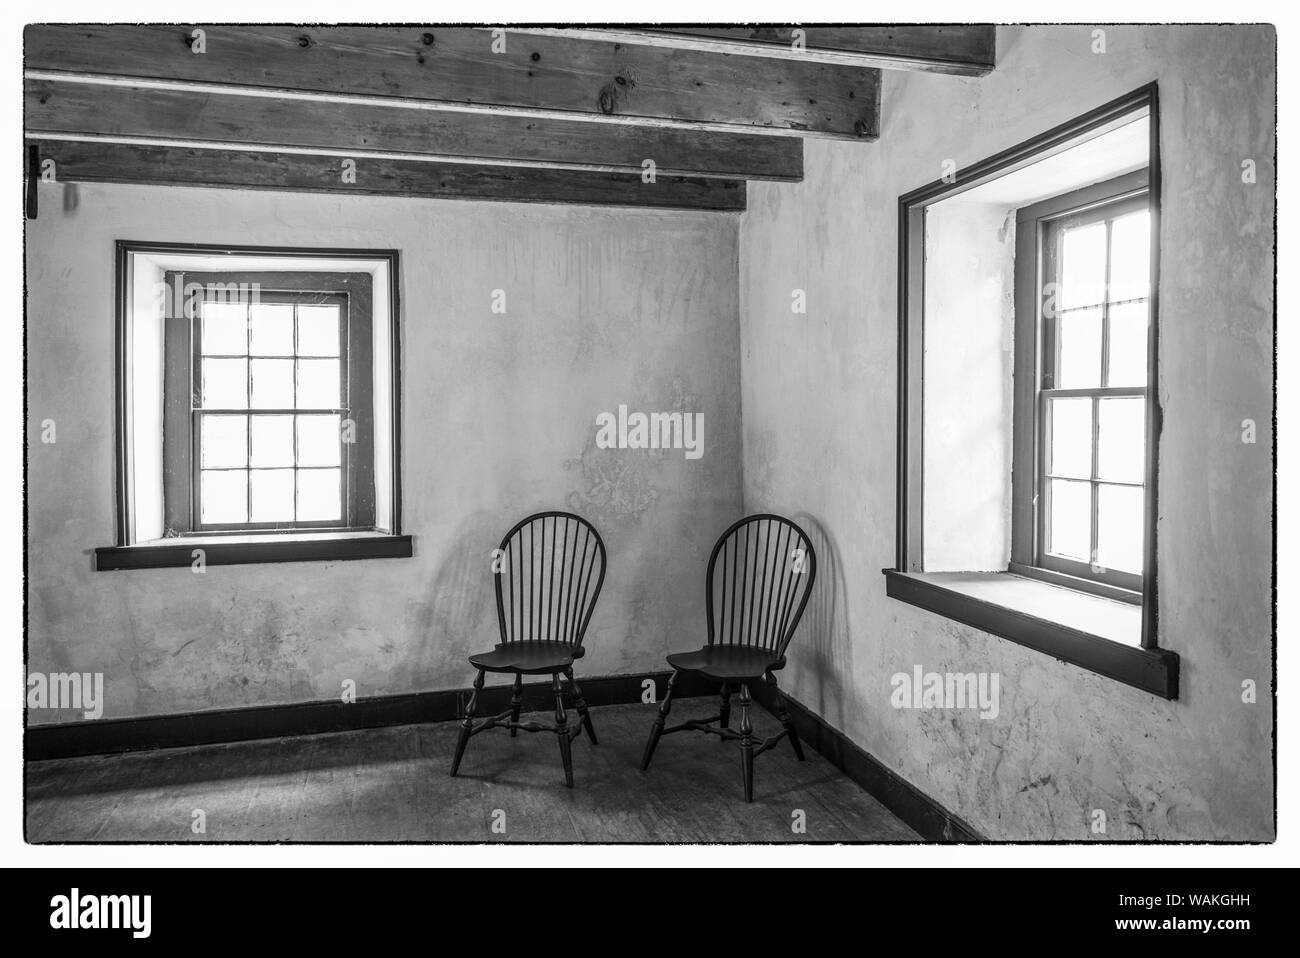 USA, Pennsylvania, Elverson. Hopewell Furnace National Historic Site, early 18th century ironmaking plantation, tenant house interior Stock Photo